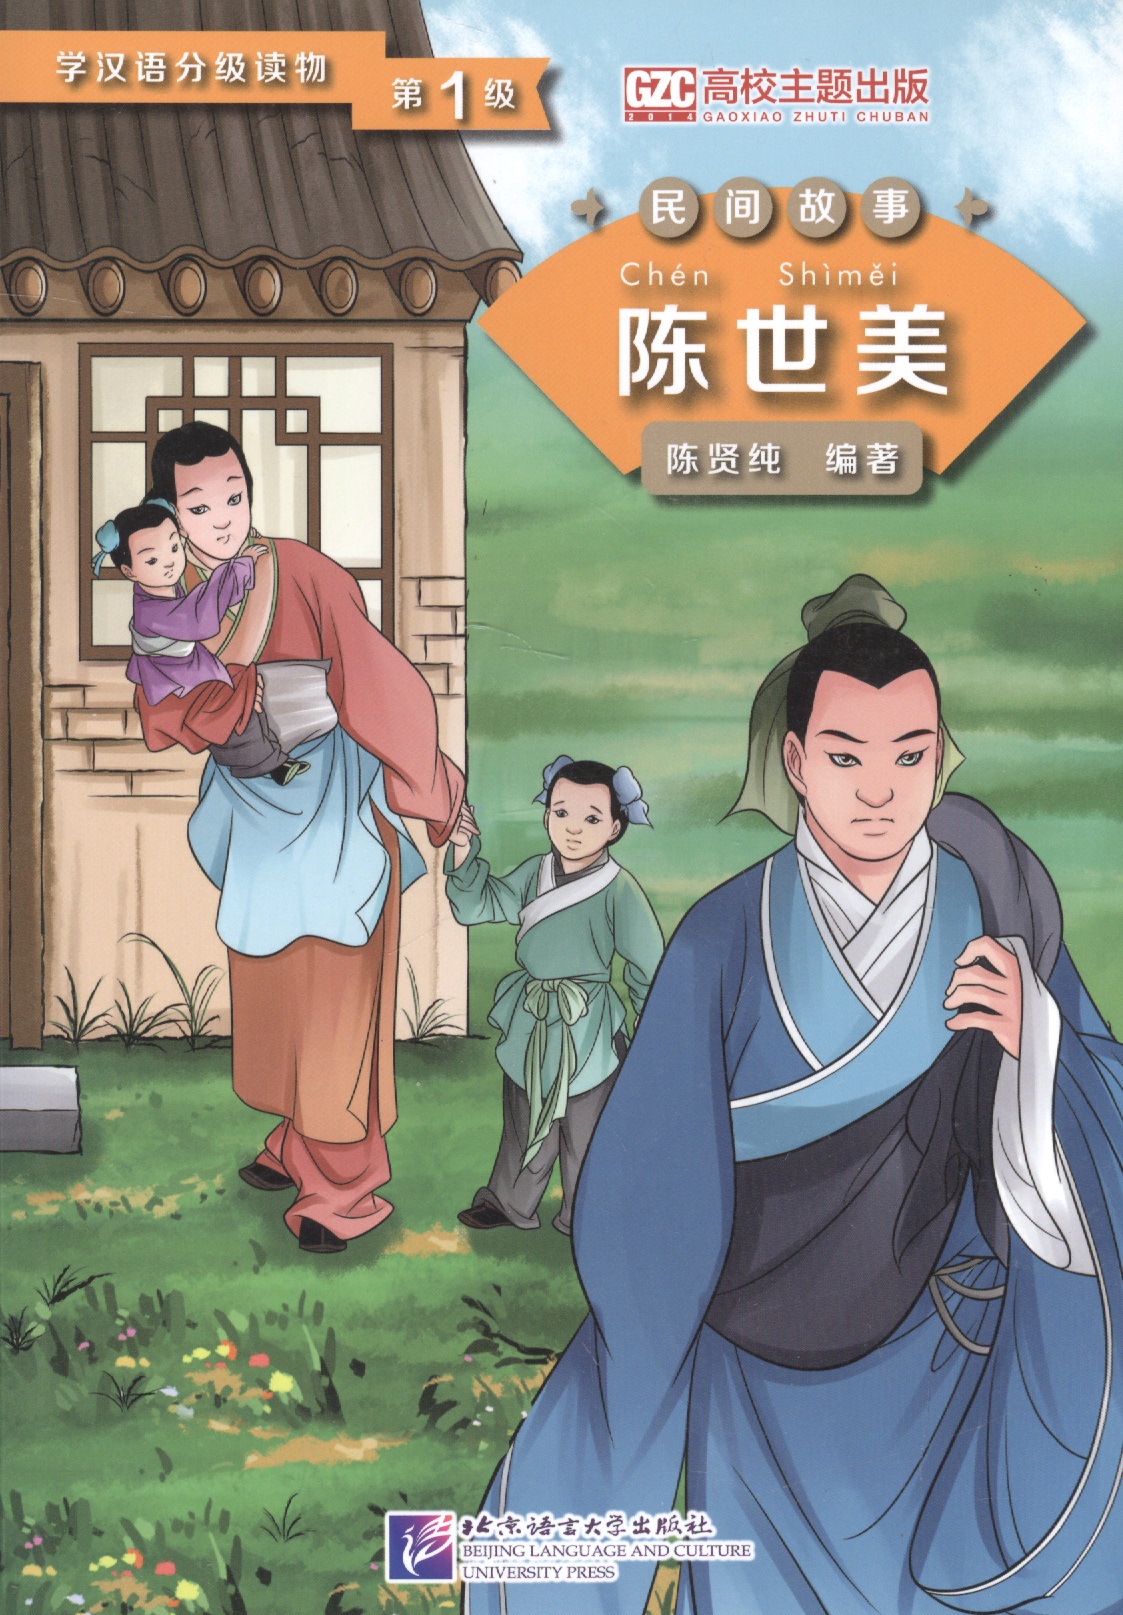 Graded Readers for Chinese Language Learners (Folktales): Chen Shimei. Адаптированная книга для чтения чэнь гуансы чэнь фэйфей перевернутая логика алибабы